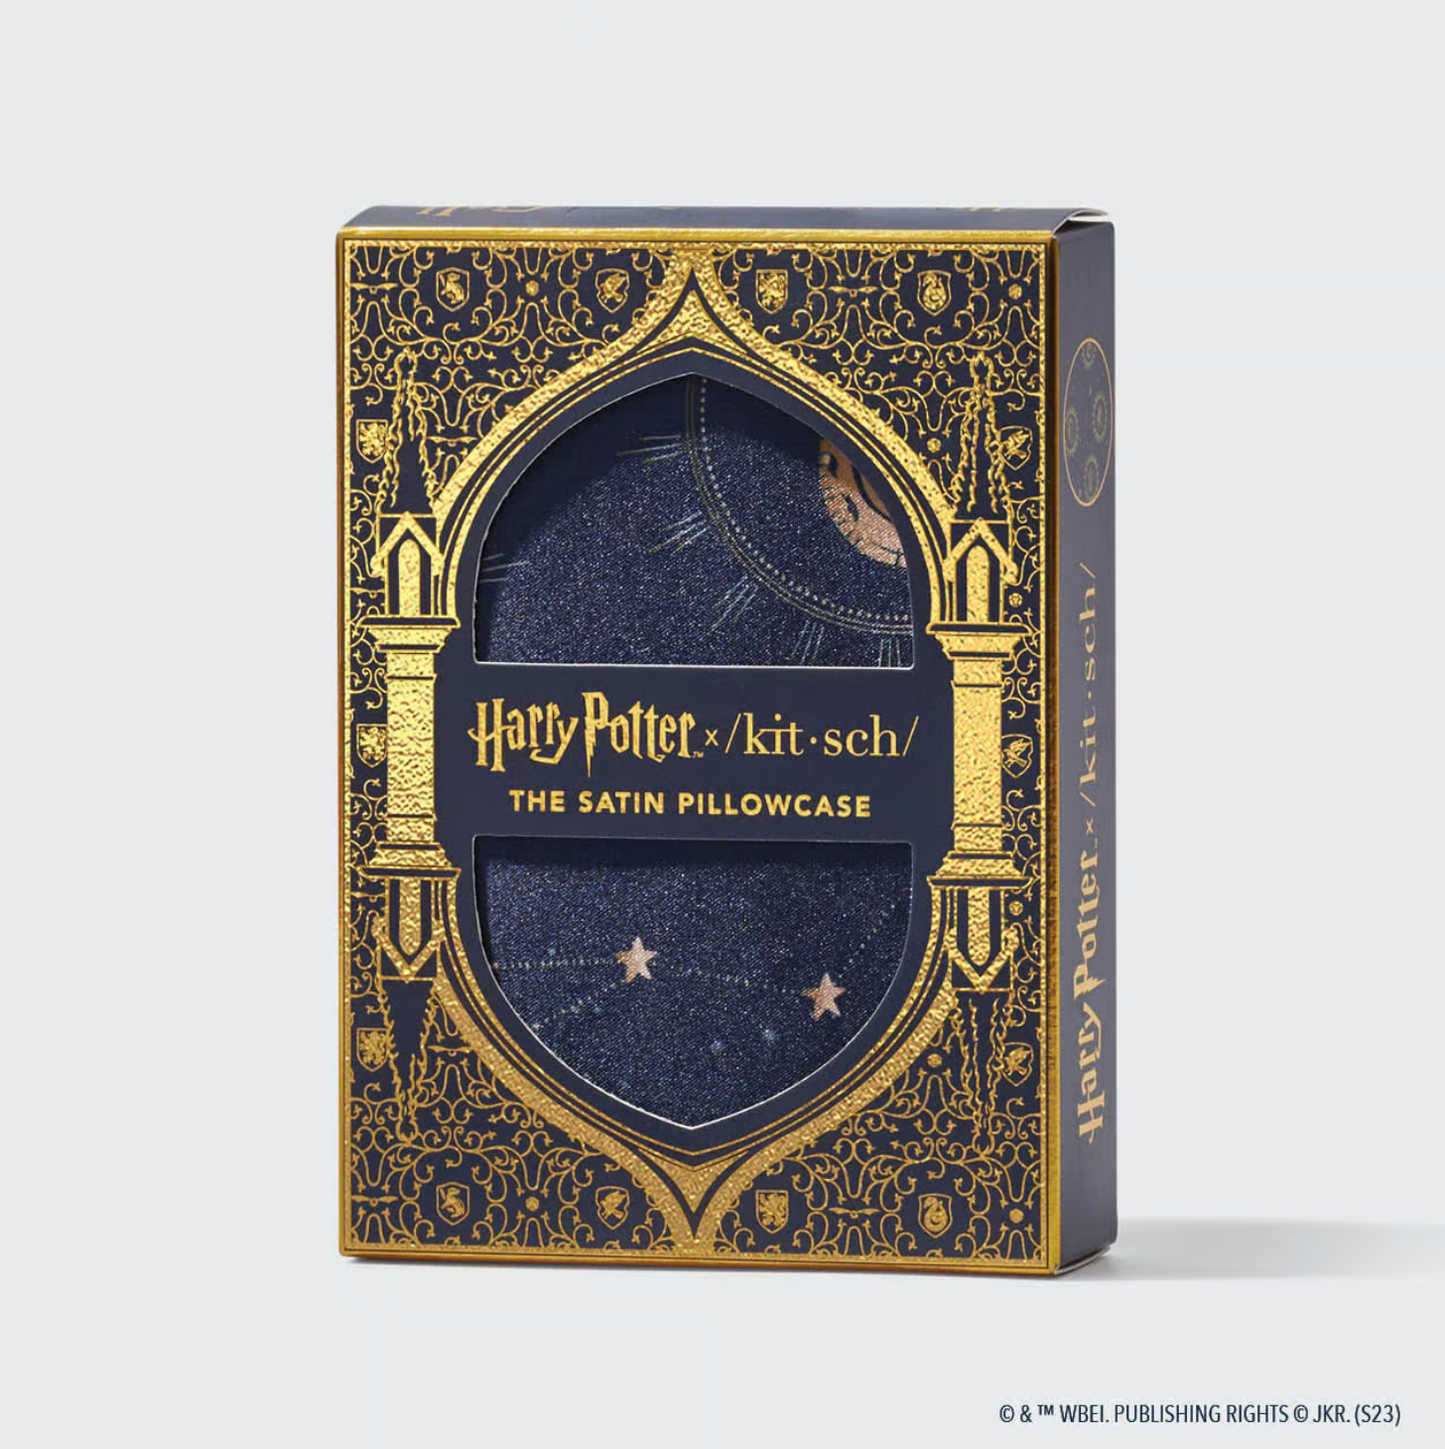 Harry Potter x Kitsch Satin Pillowcase - Midnight at Hogwarts